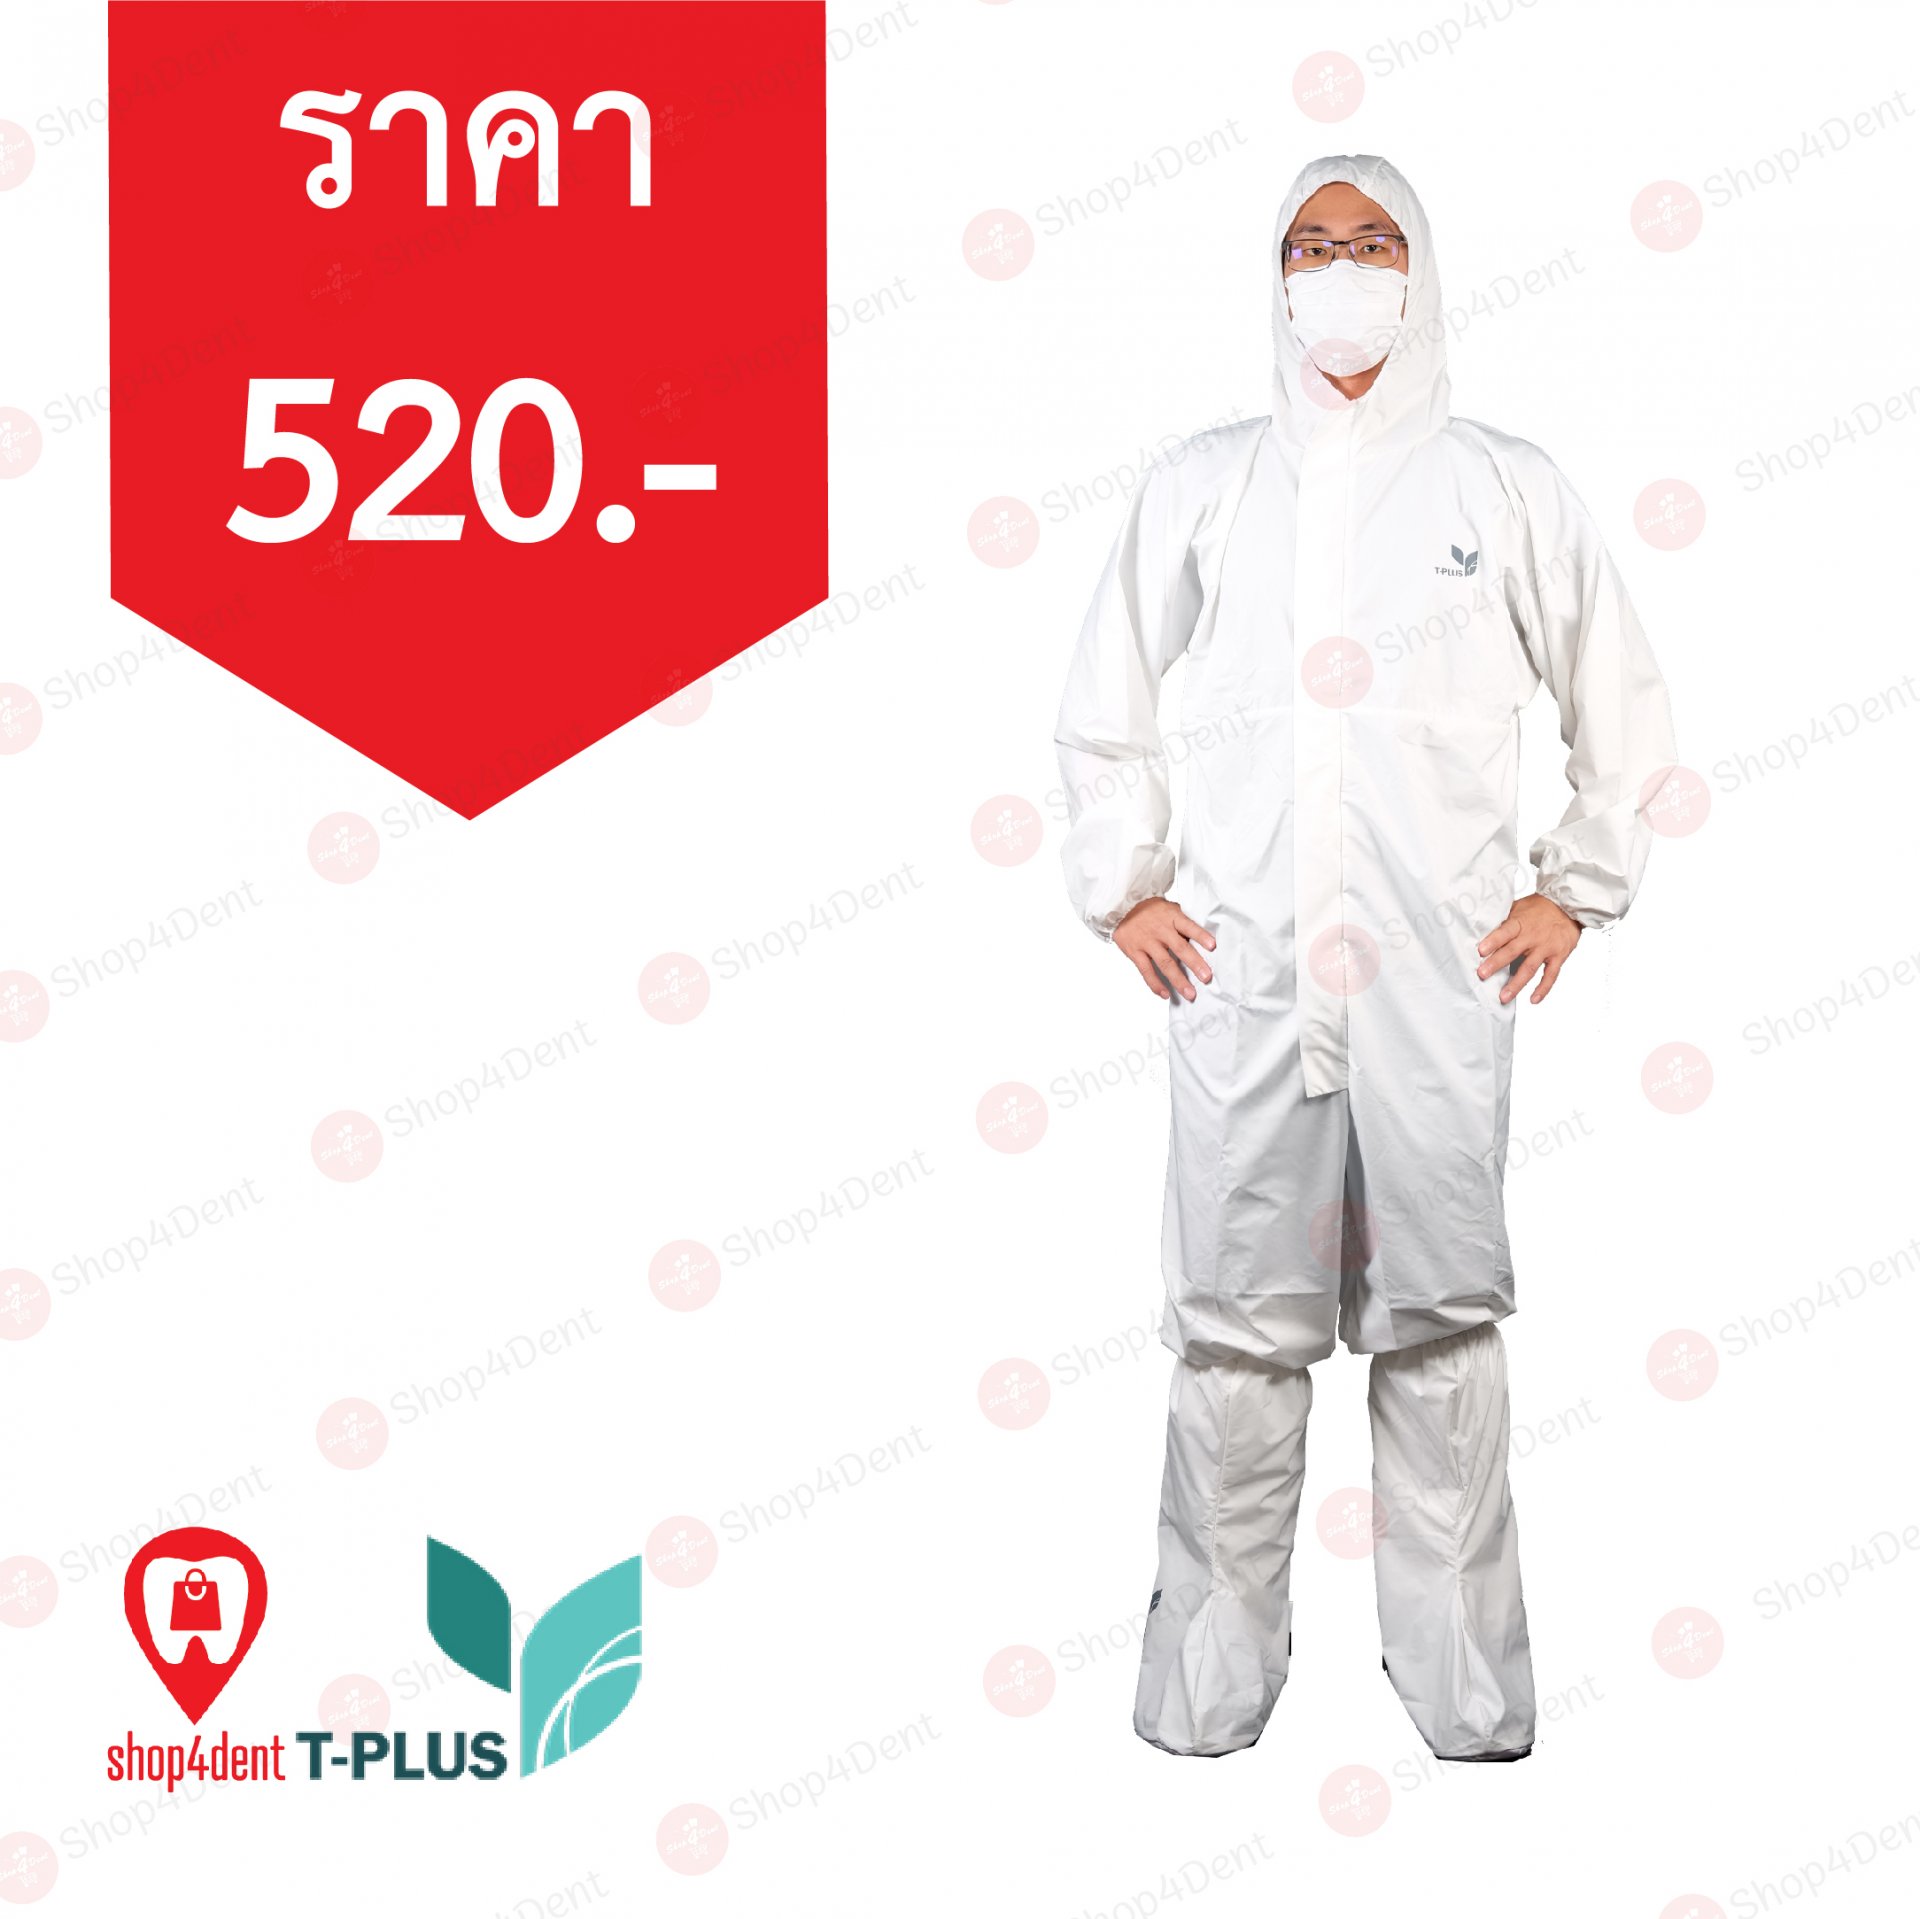 Tplus Medical PPE ชุดคลุมทางการแพทย์ป้องกันน้ำ Coverall